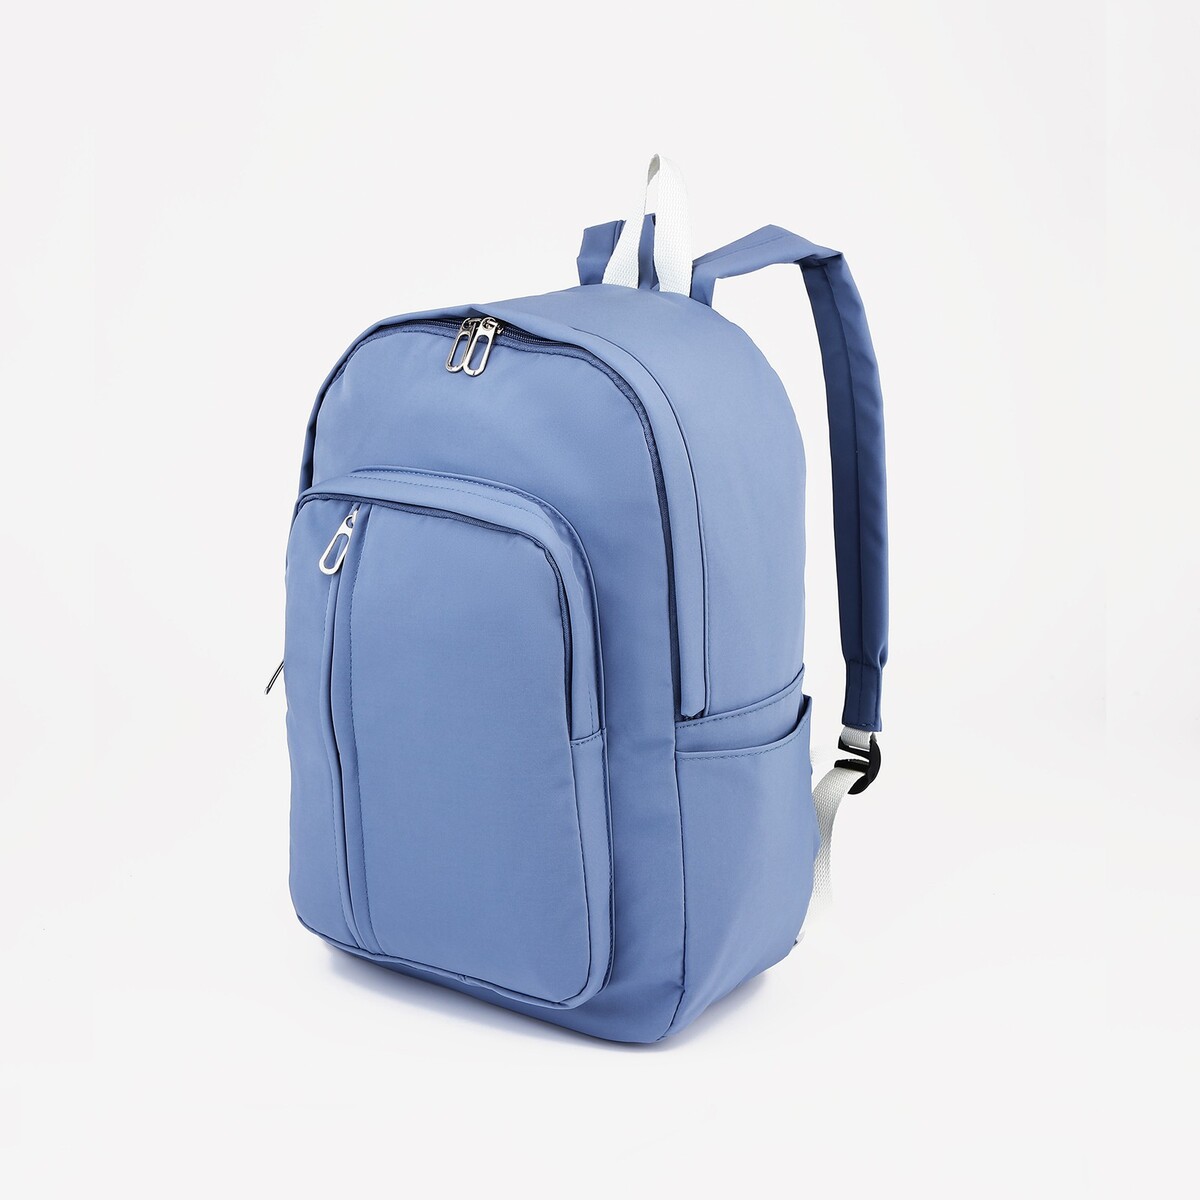 Рюкзак молодежный из текстиля на молнии, 5 карманов, цвет синий рюкзак молодежный из текстиля 5 карманов синий